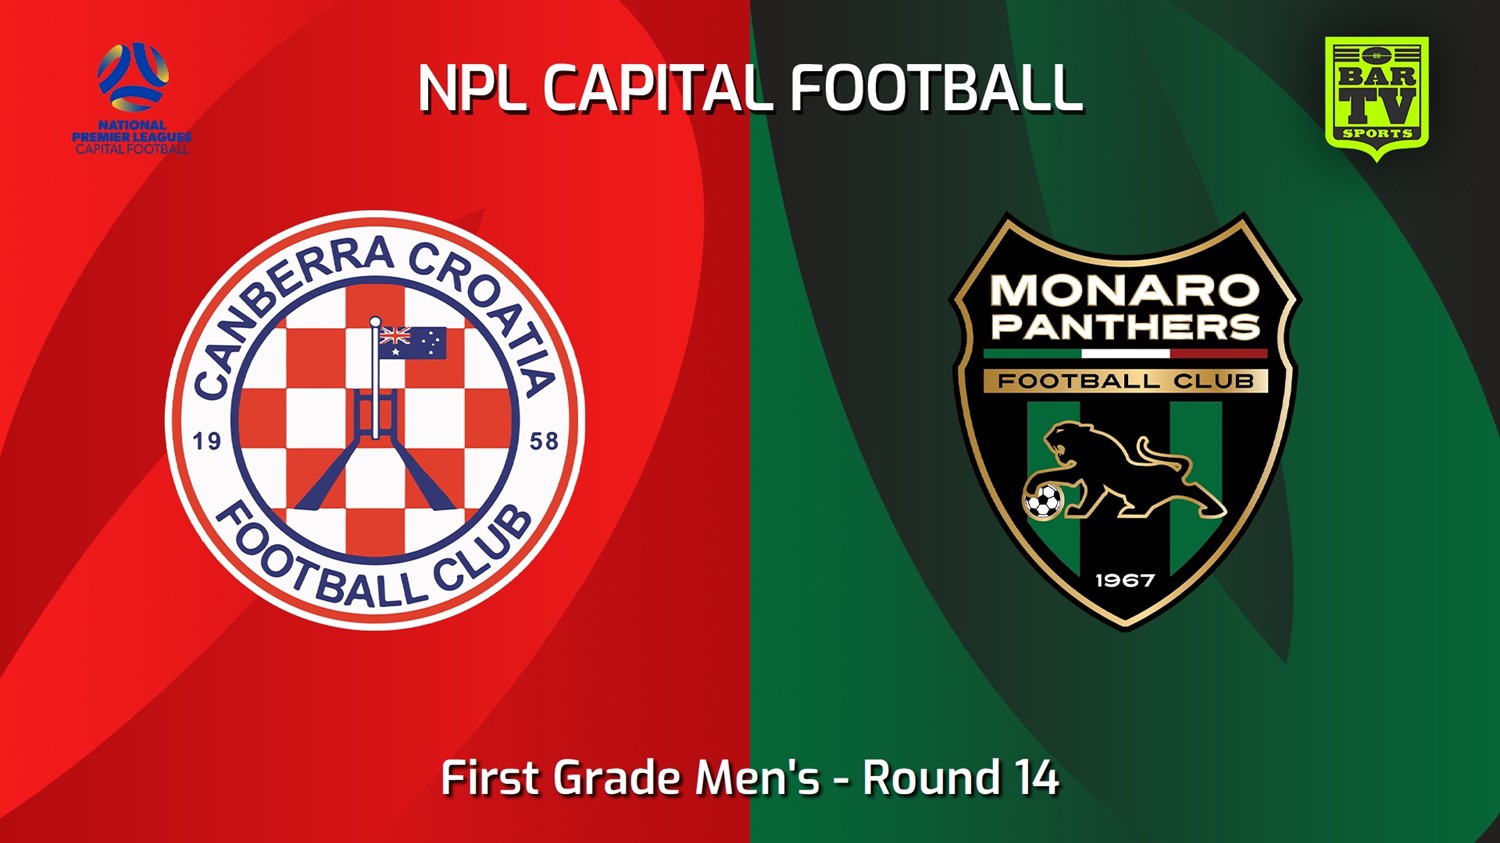 240707-video-Capital NPL Round 14 - Canberra Croatia FC v Monaro Panthers Minigame Slate Image